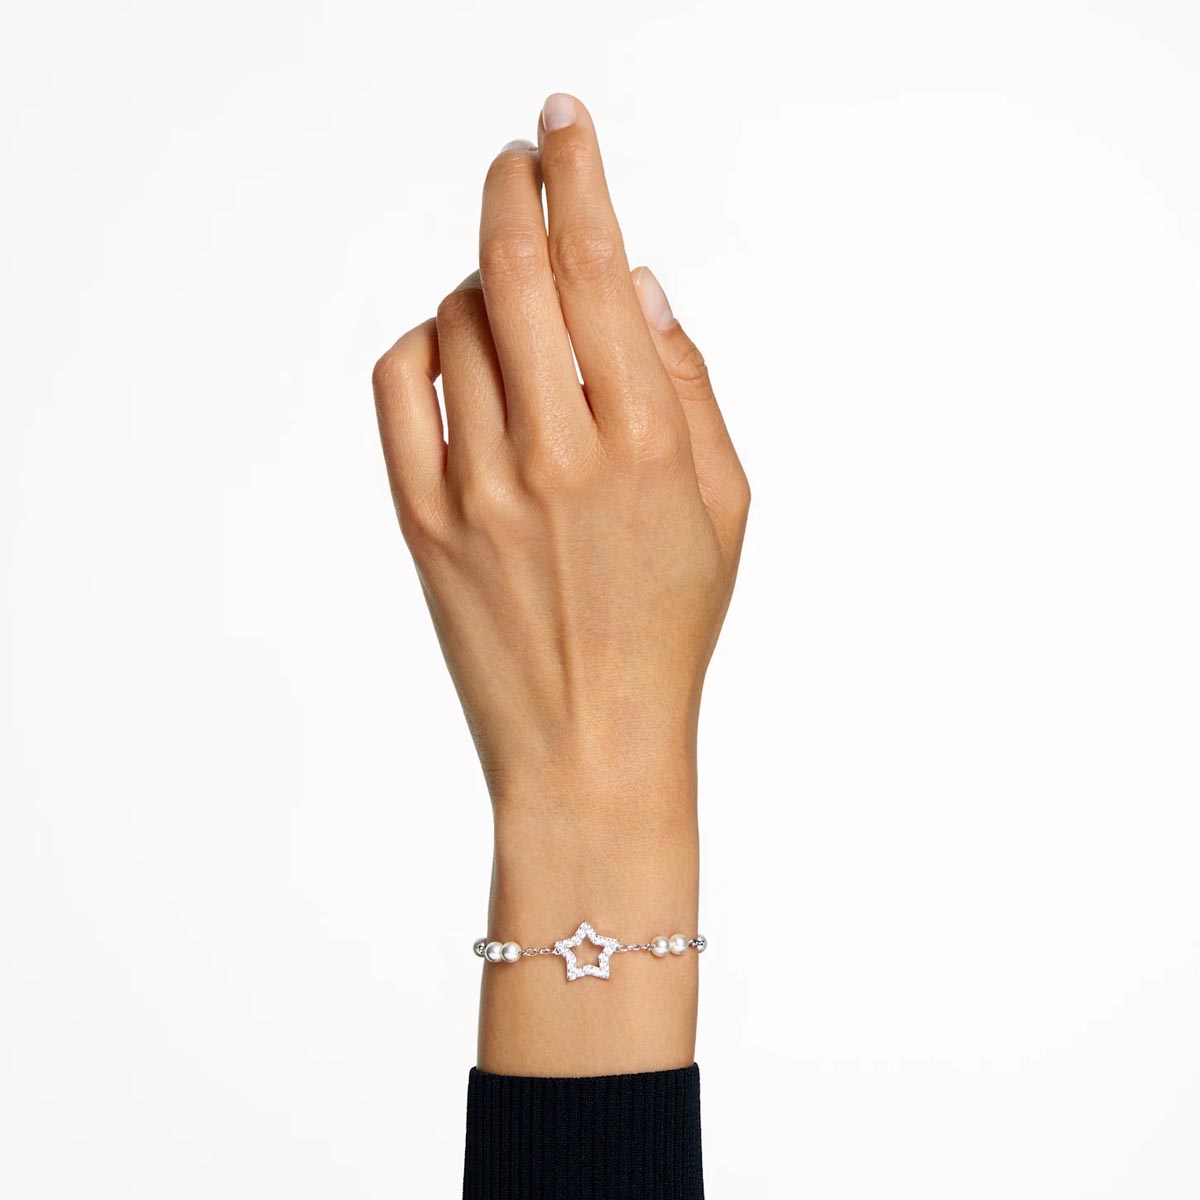 Swarovski Crystal Stella Pearl Star Bracelet